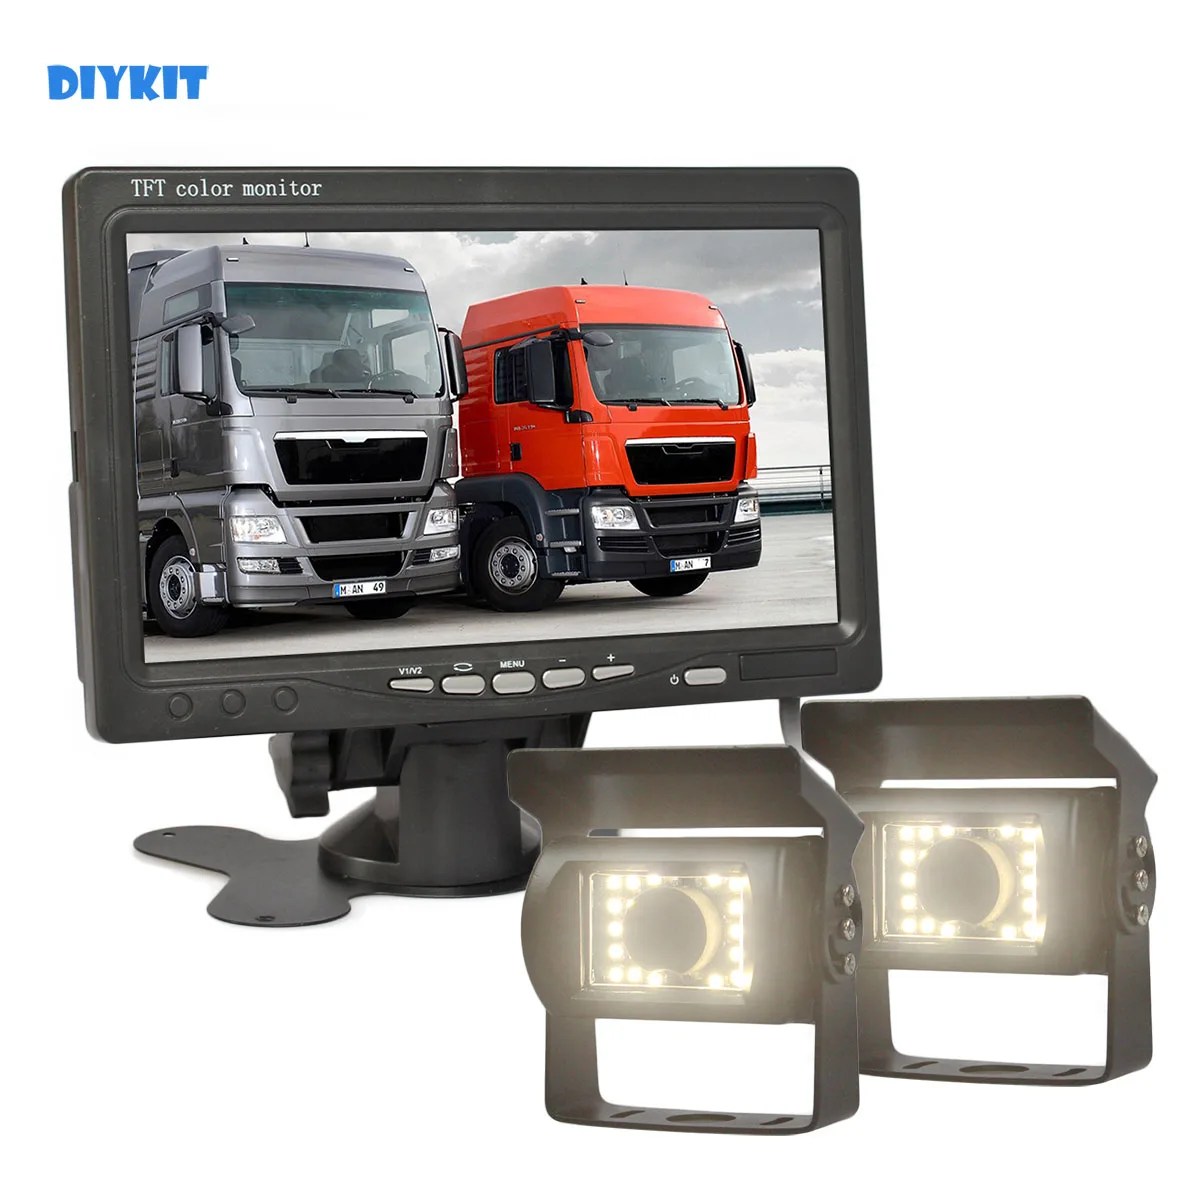 

DIYKIT 2 x 4pin LED Night Vision CCD Rear View Camera Kit + DC 12V-24V 7inch TFT LCD Car Monitor System for Bus Houseboat Truck